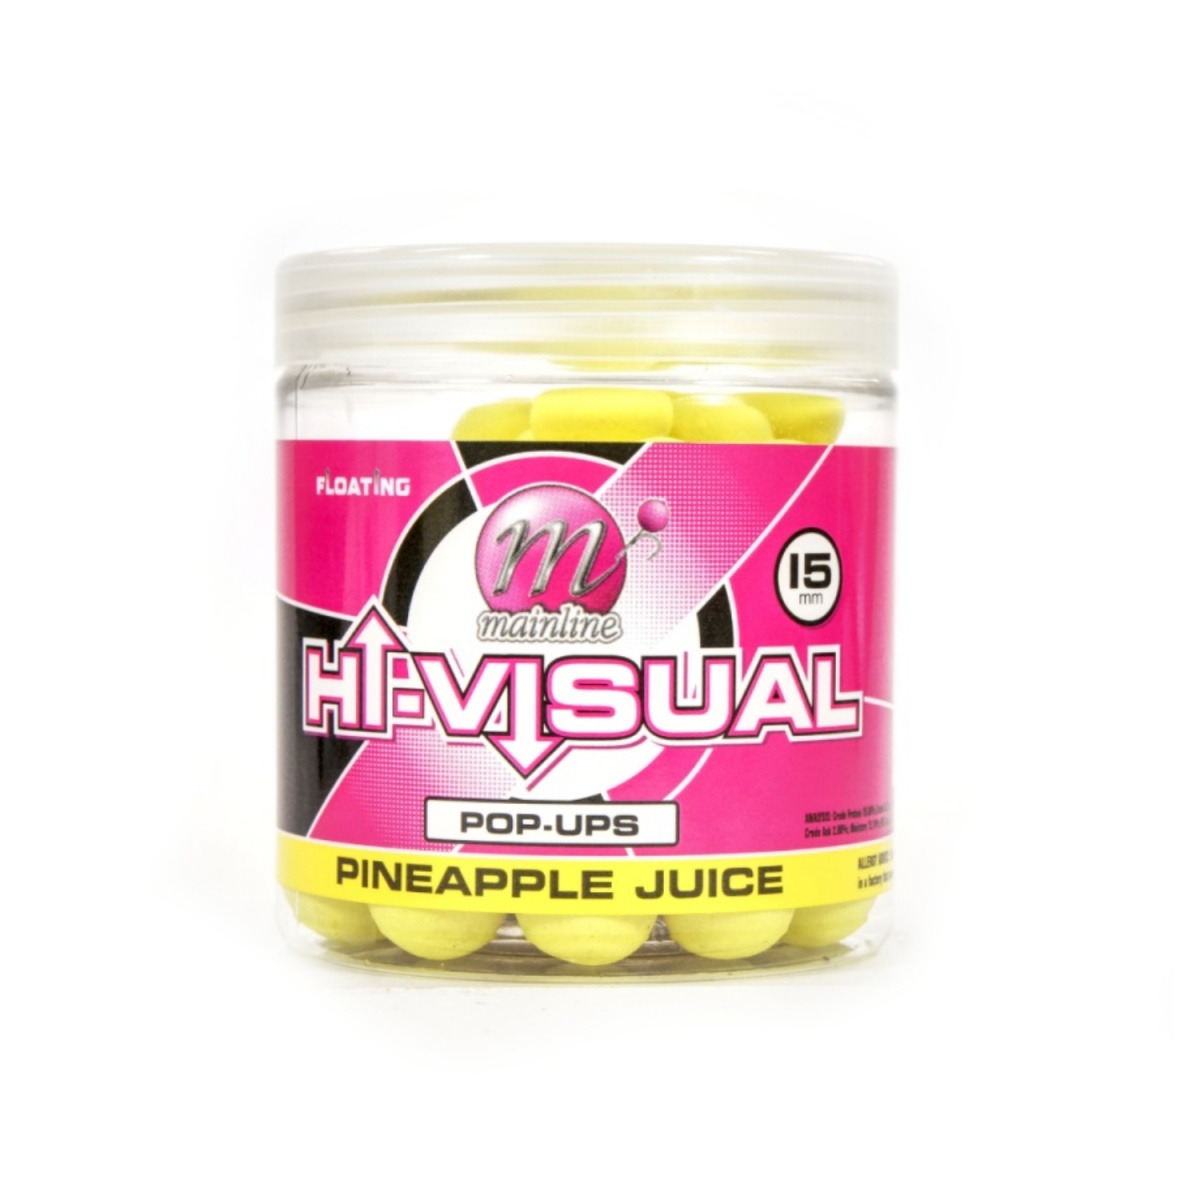 NEW Mainline Hi-Visual Pop-Ups Pineapple Juice 15 mm średnica